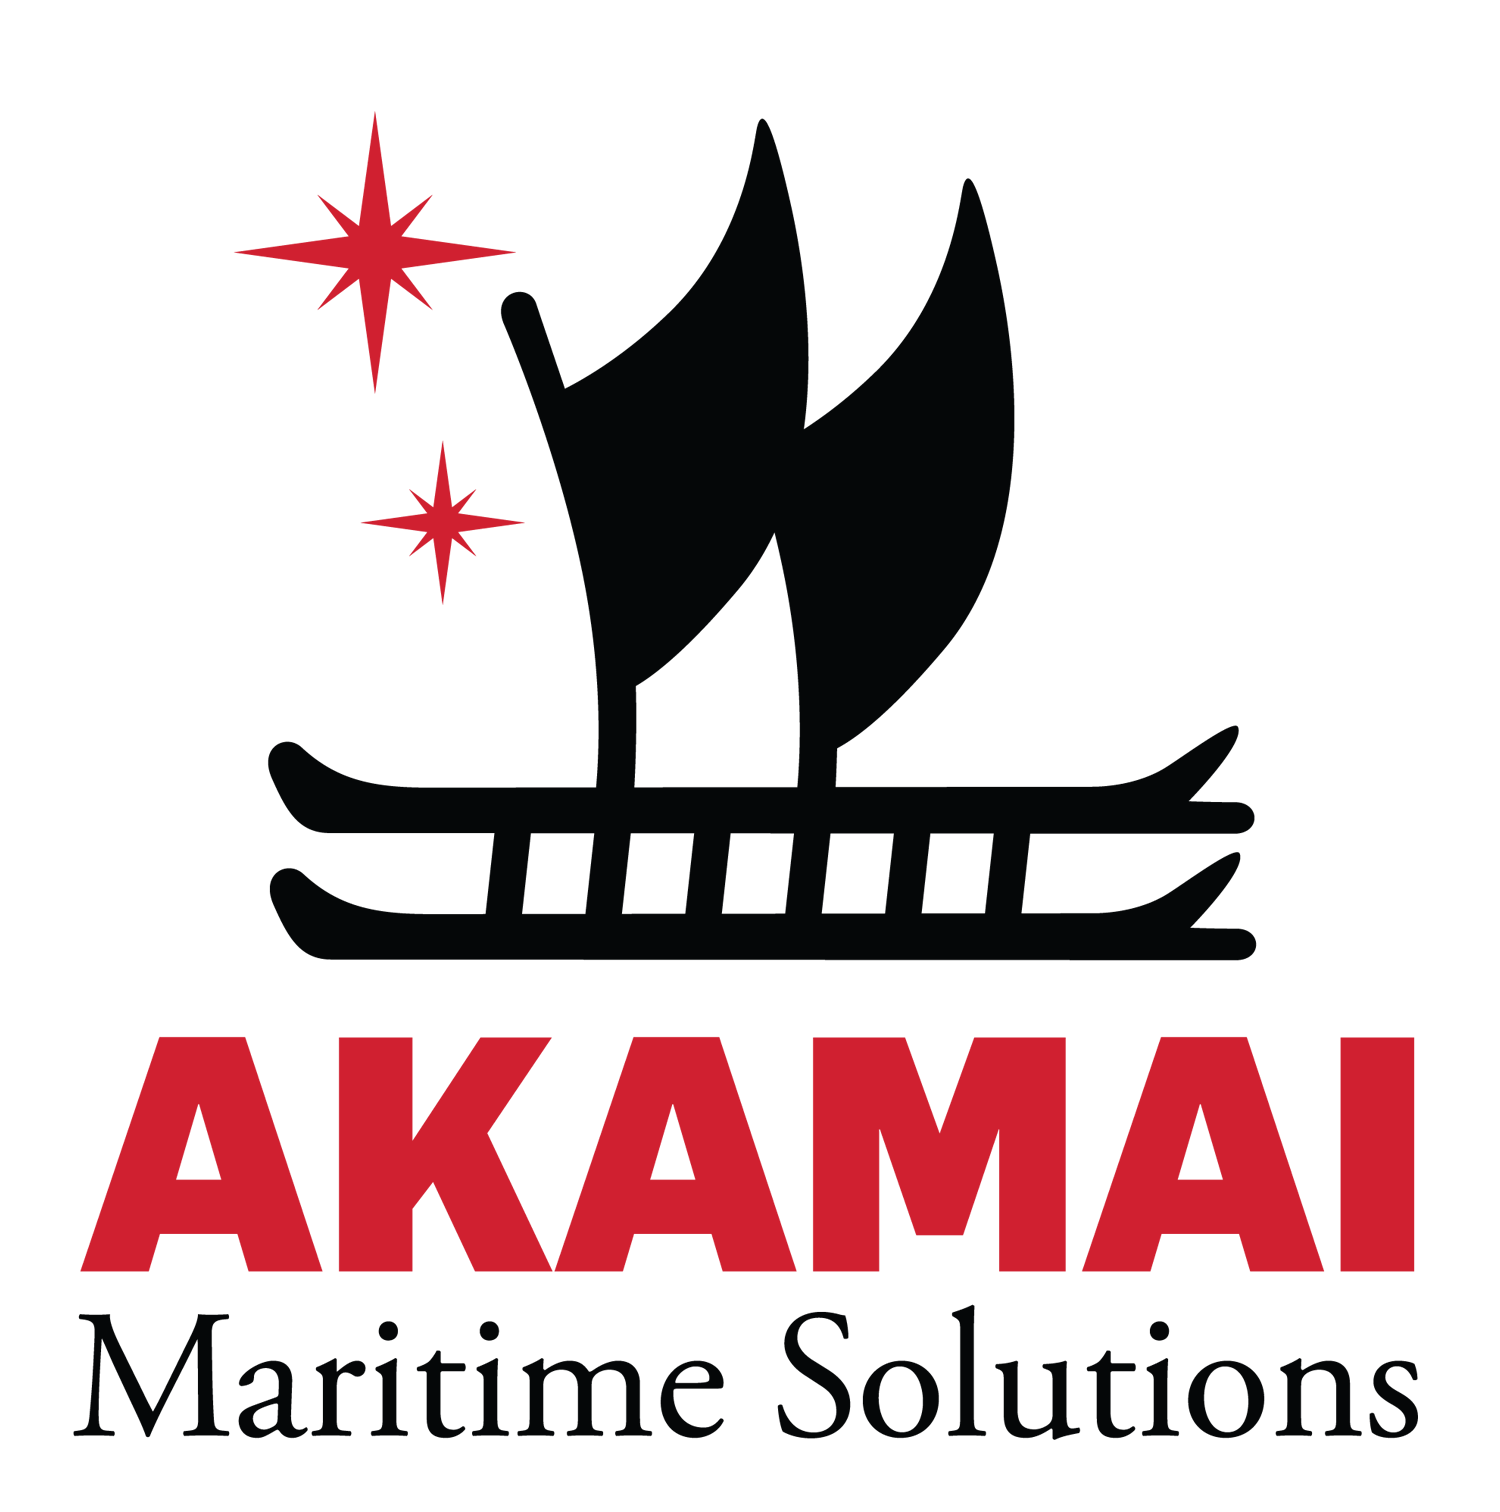 Akamai Maritime Solutions - Logo